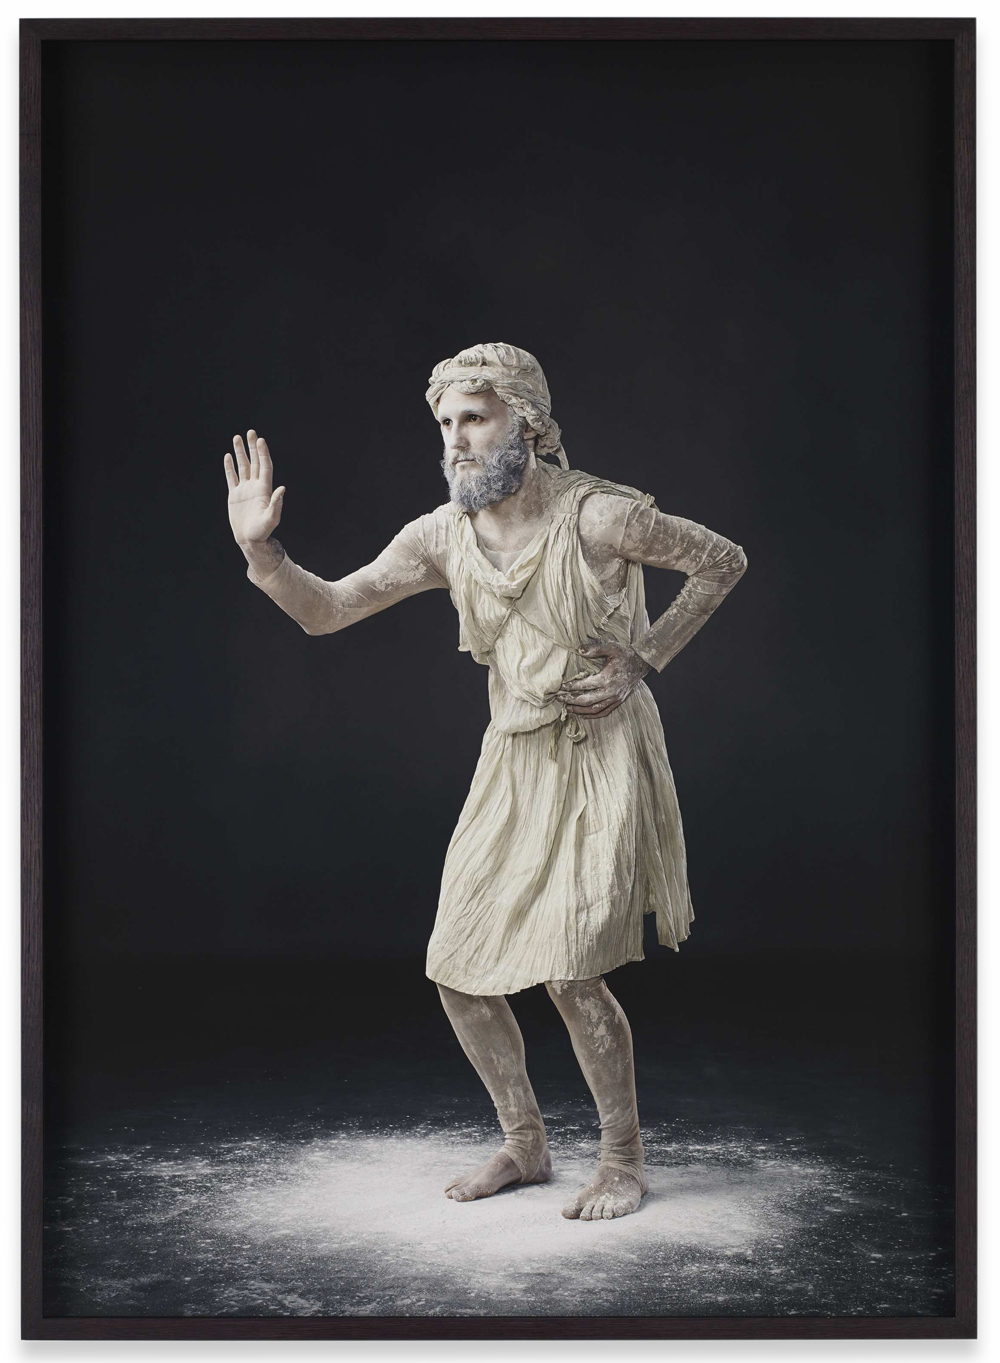  Alexandre Singh,&nbsp; Number Twenty-Three ,&nbsp;2014,&nbsp;Photographer: Kate Lacey,&nbsp;Giclee print,&nbsp;111 x 79.3 cm,&nbsp;113.5 x 82 cm (framed),&nbsp;Courtesy of Sprüth Magers / Art:Concept, Paris / Metro Pictures, New York / Monitor, Rome